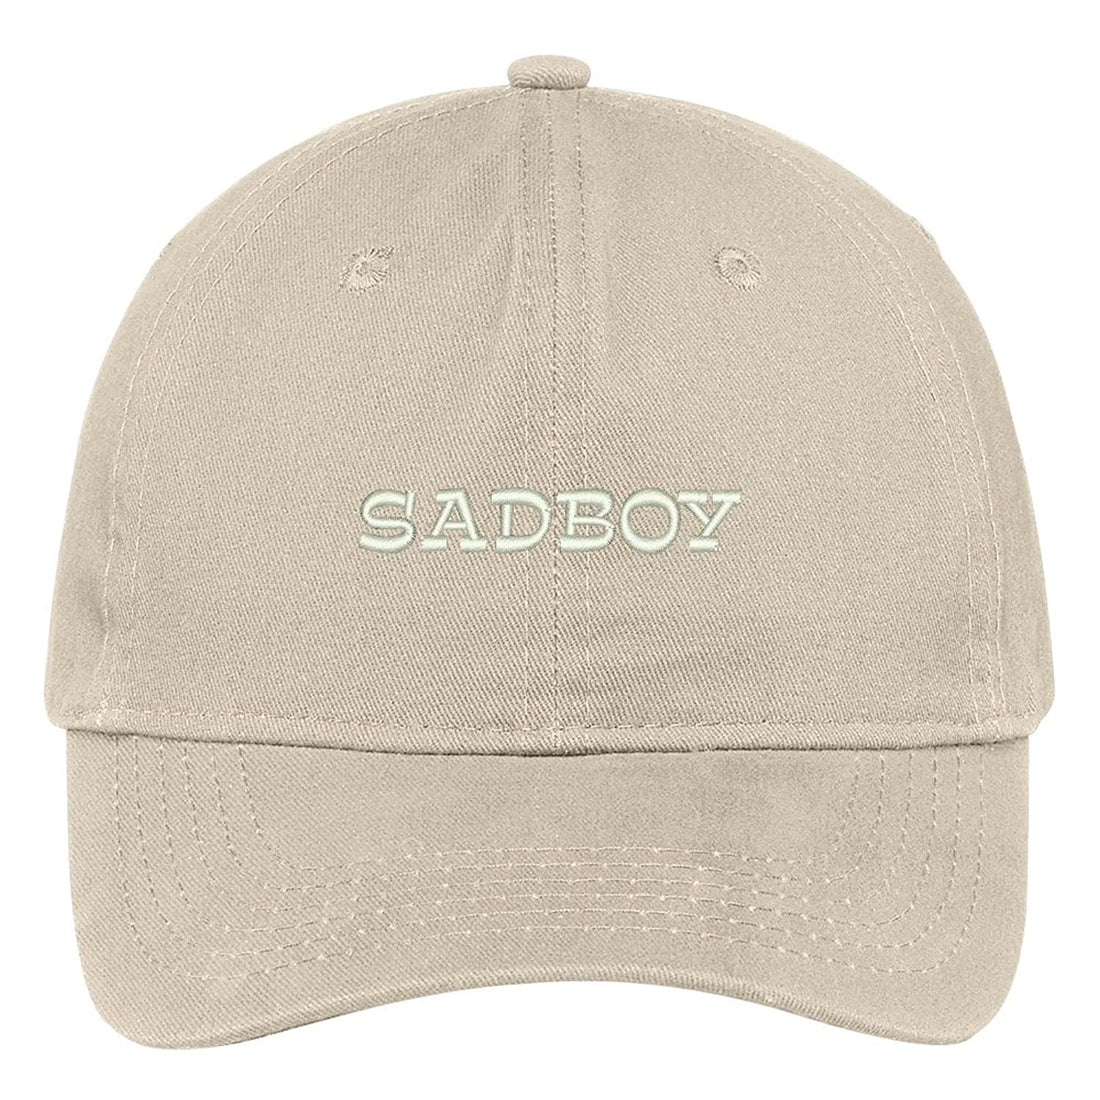 Trendy Apparel Shop Sad Boy Embroidered Soft Low Profile Adjustable Cotton Cap